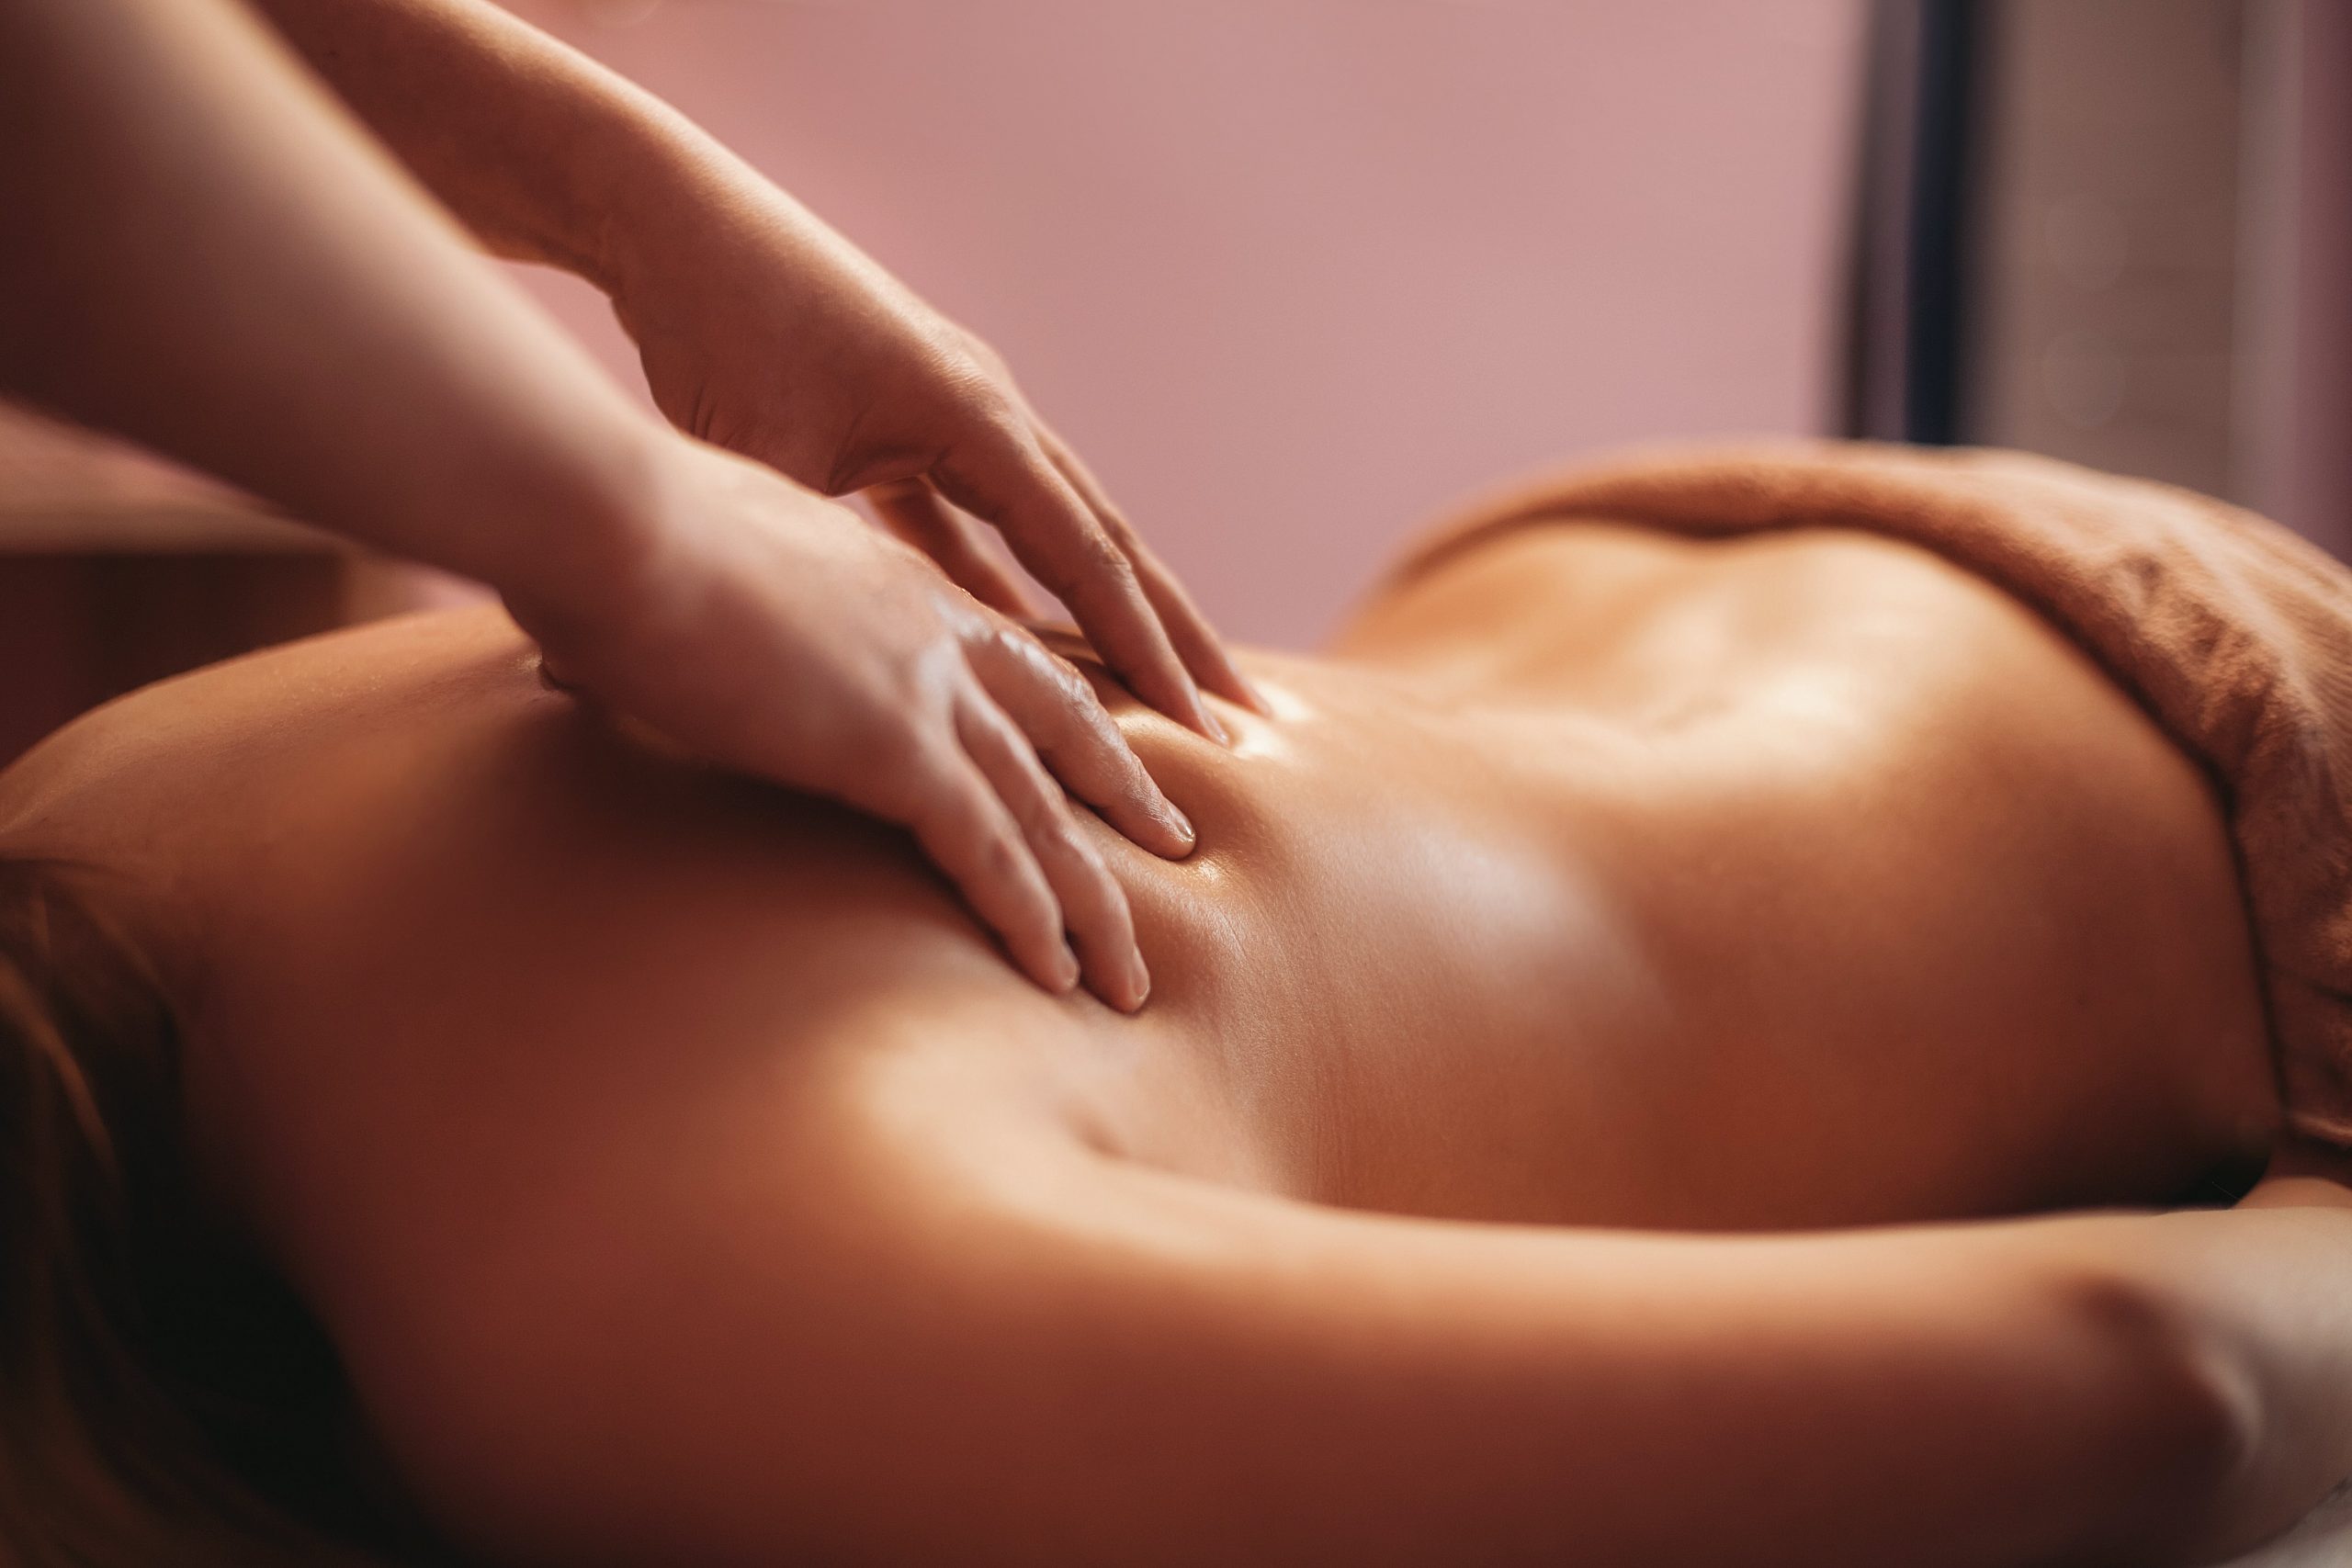 chris verville recommends massages nude pic